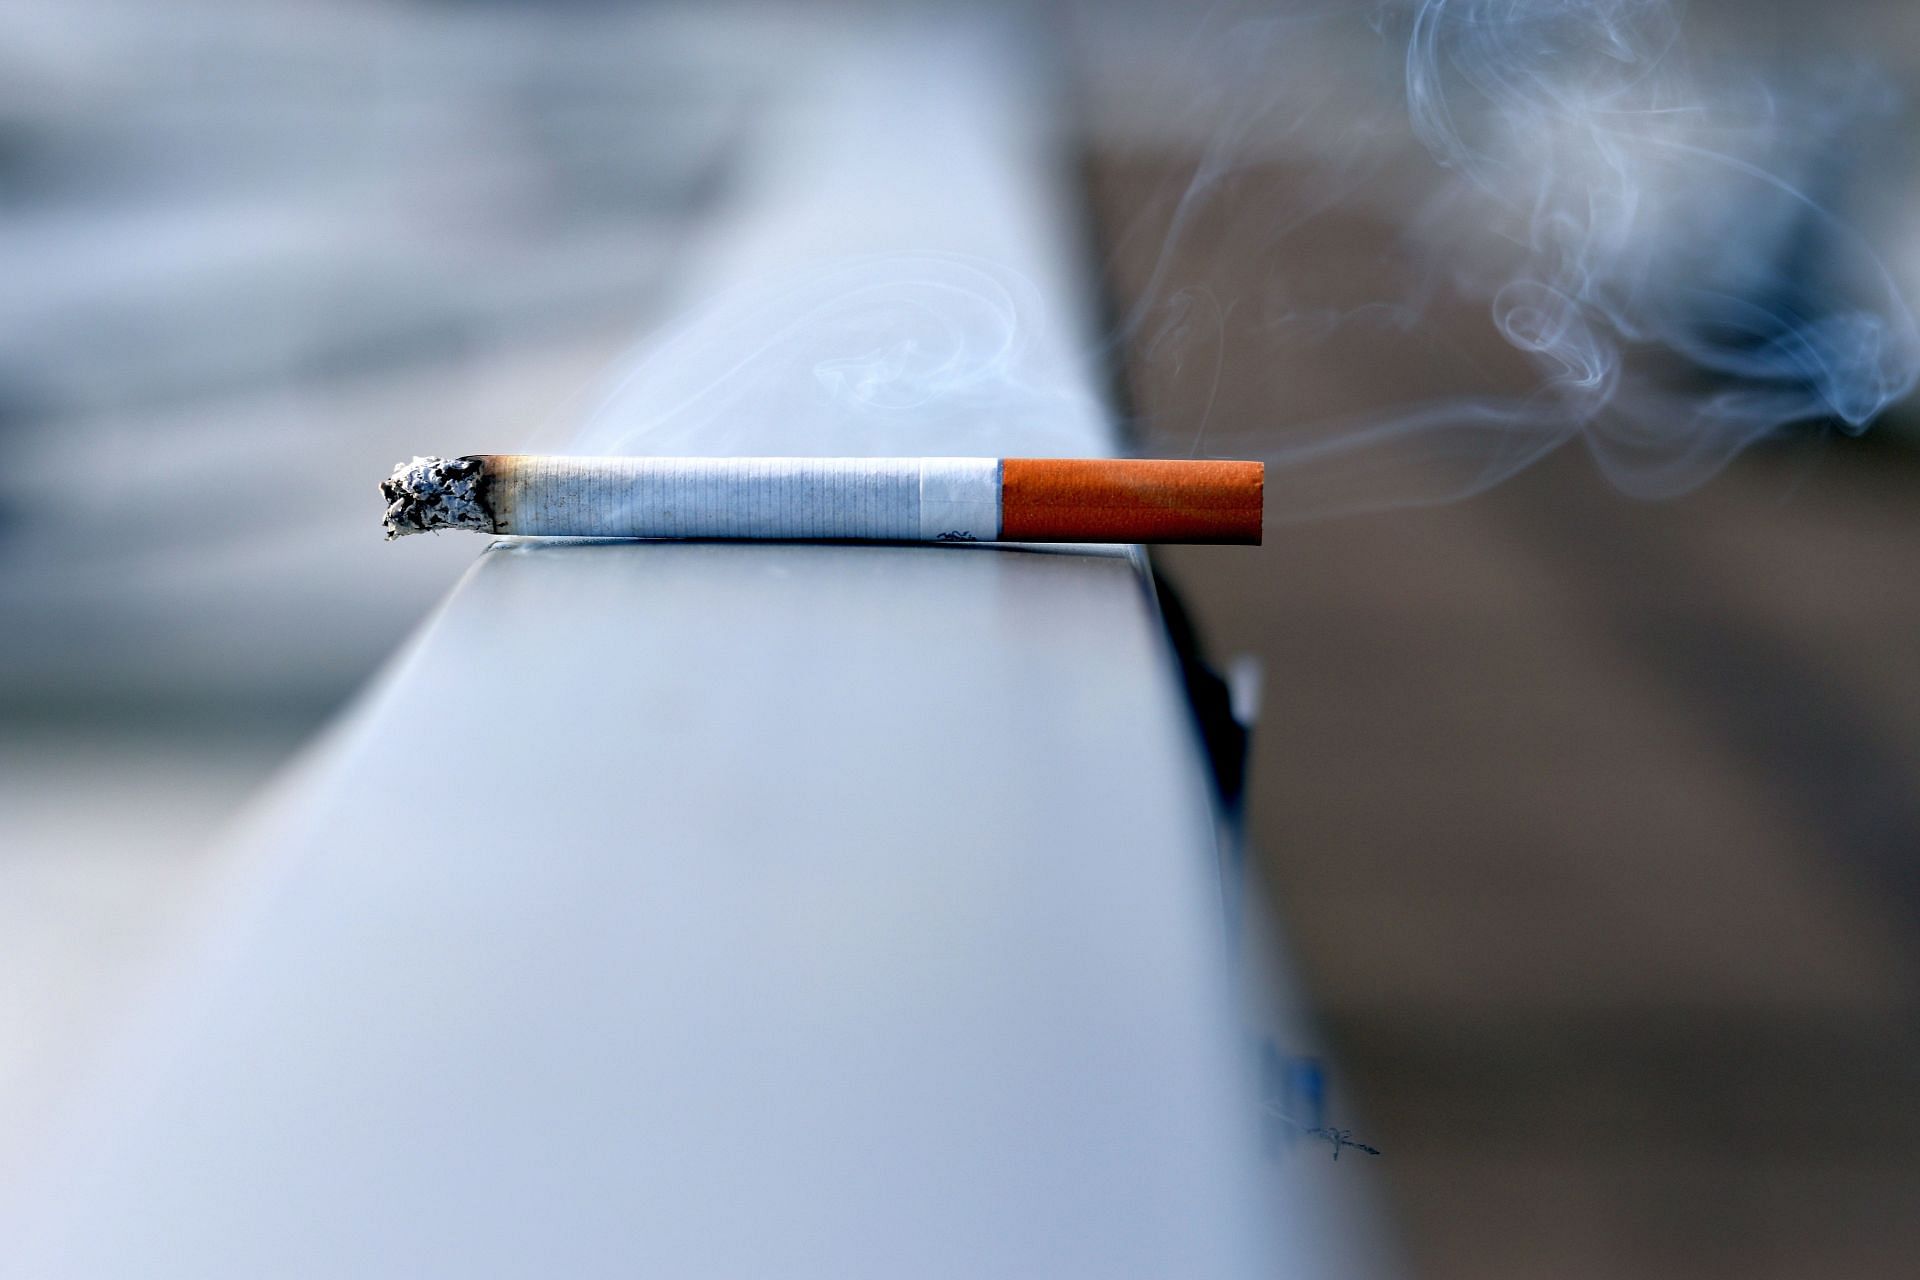 Smoking can cause lung damage. (Image via Unsplash/Andres Siimon)